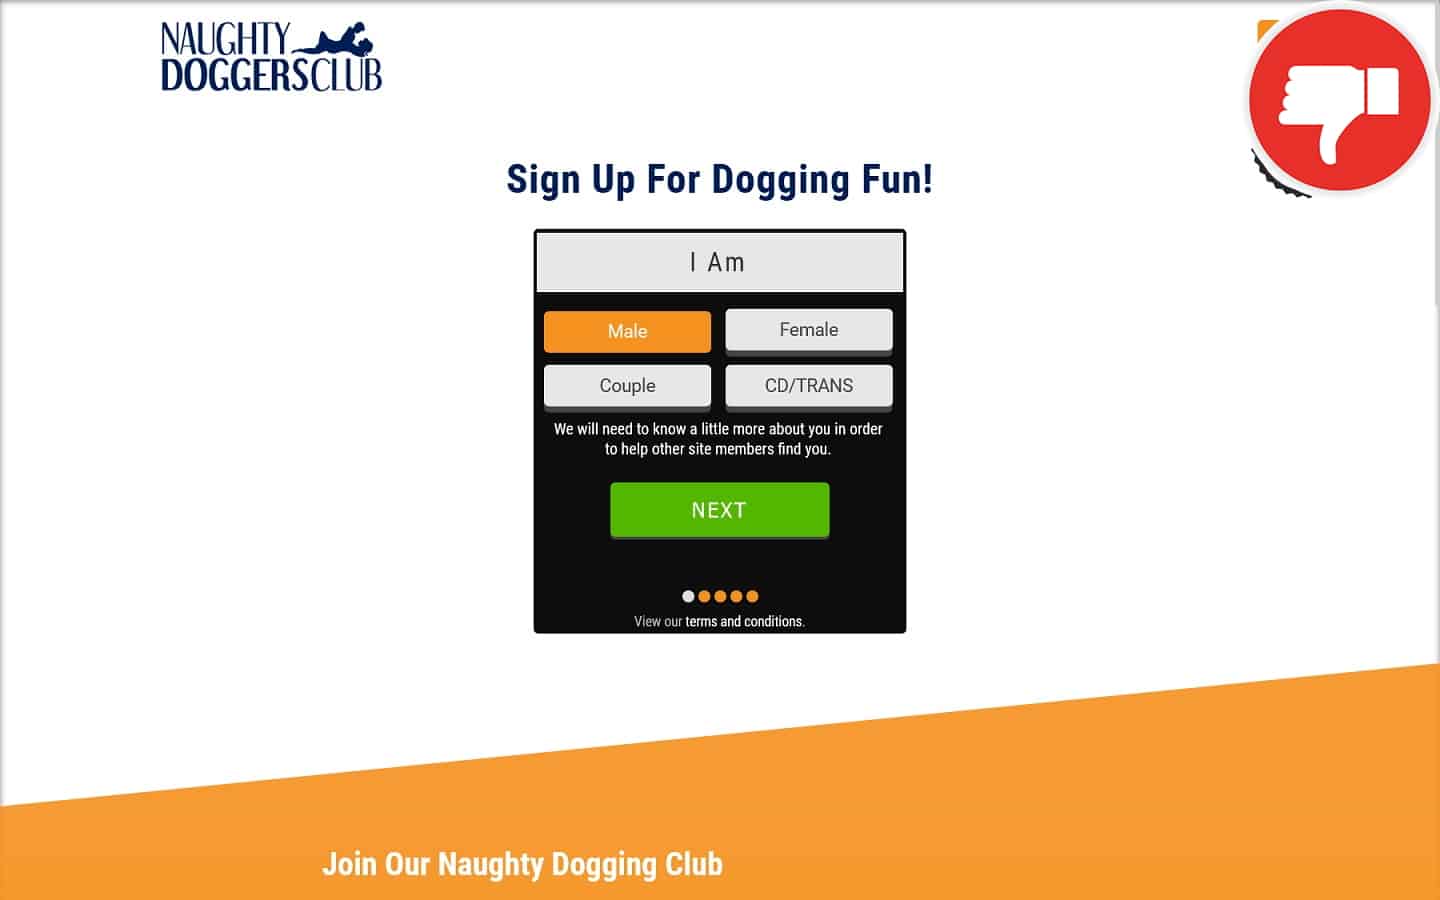 Review NaughtyDoggersClub.com scam experience